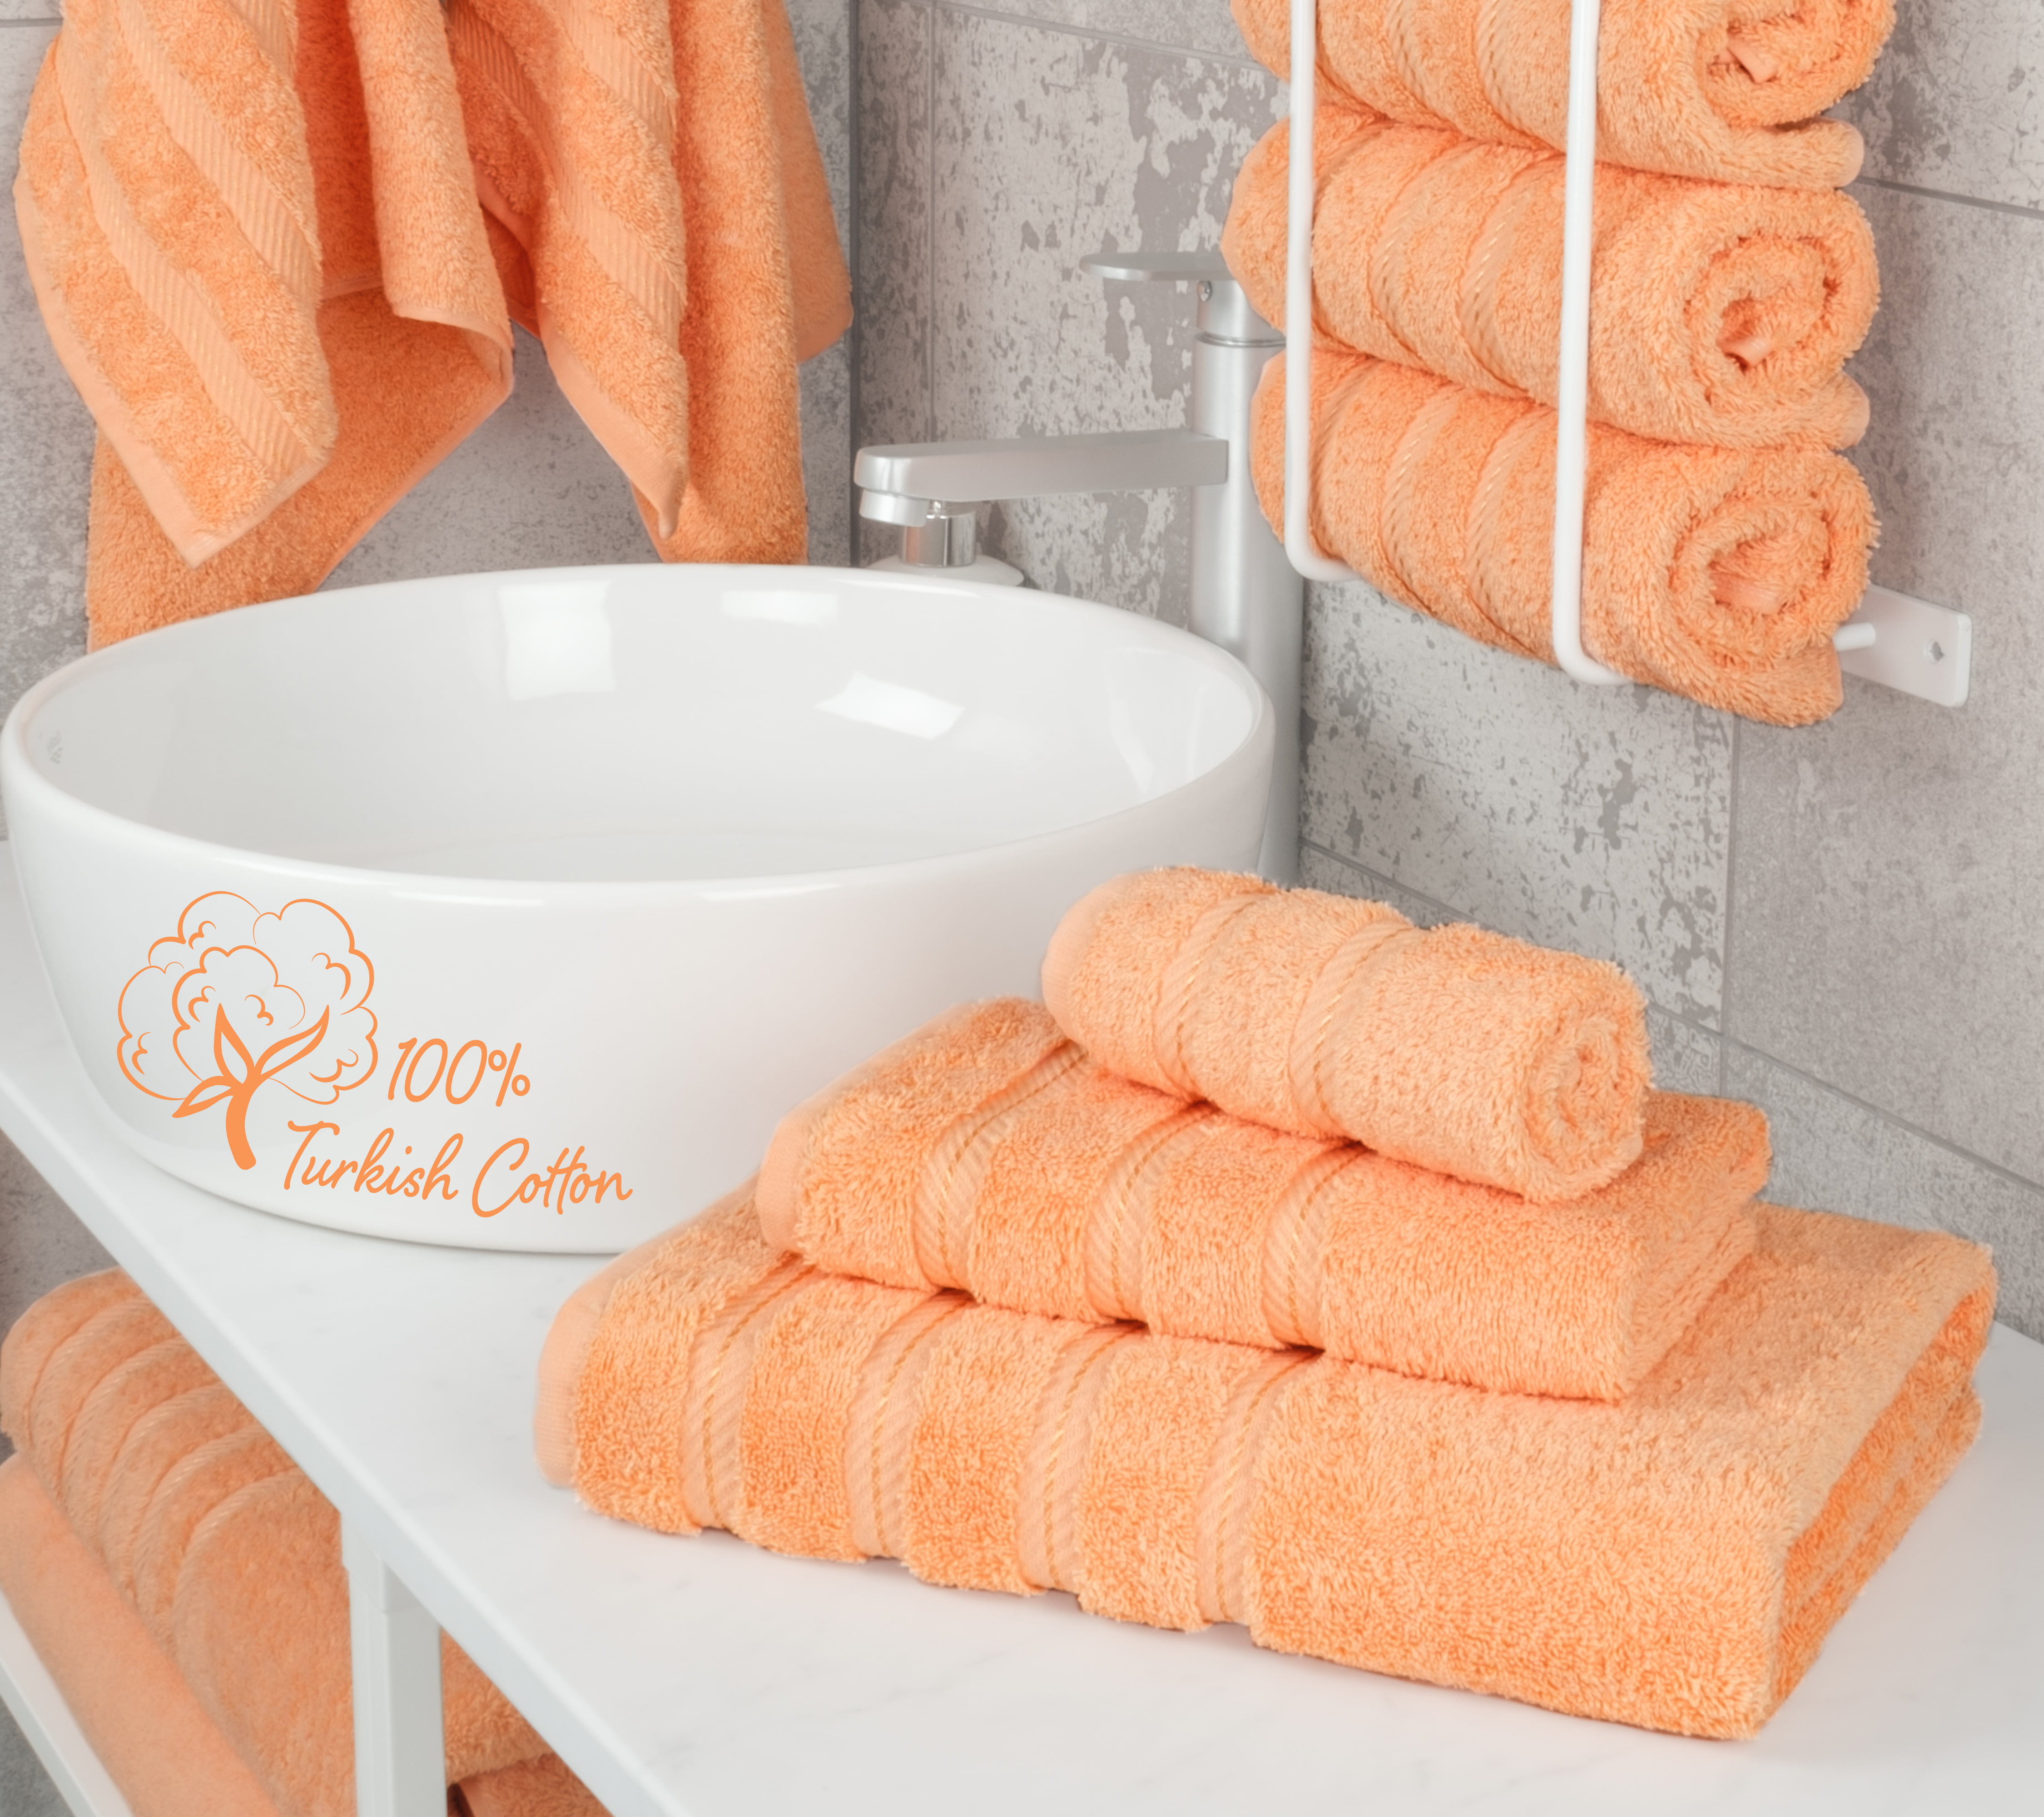 Luzia 8 Piece Towel Set - 100% Turkish Cotton, Premium Quality - 2 Bath Towels 2 Hand Towels and 4 Washcloths (Coral)